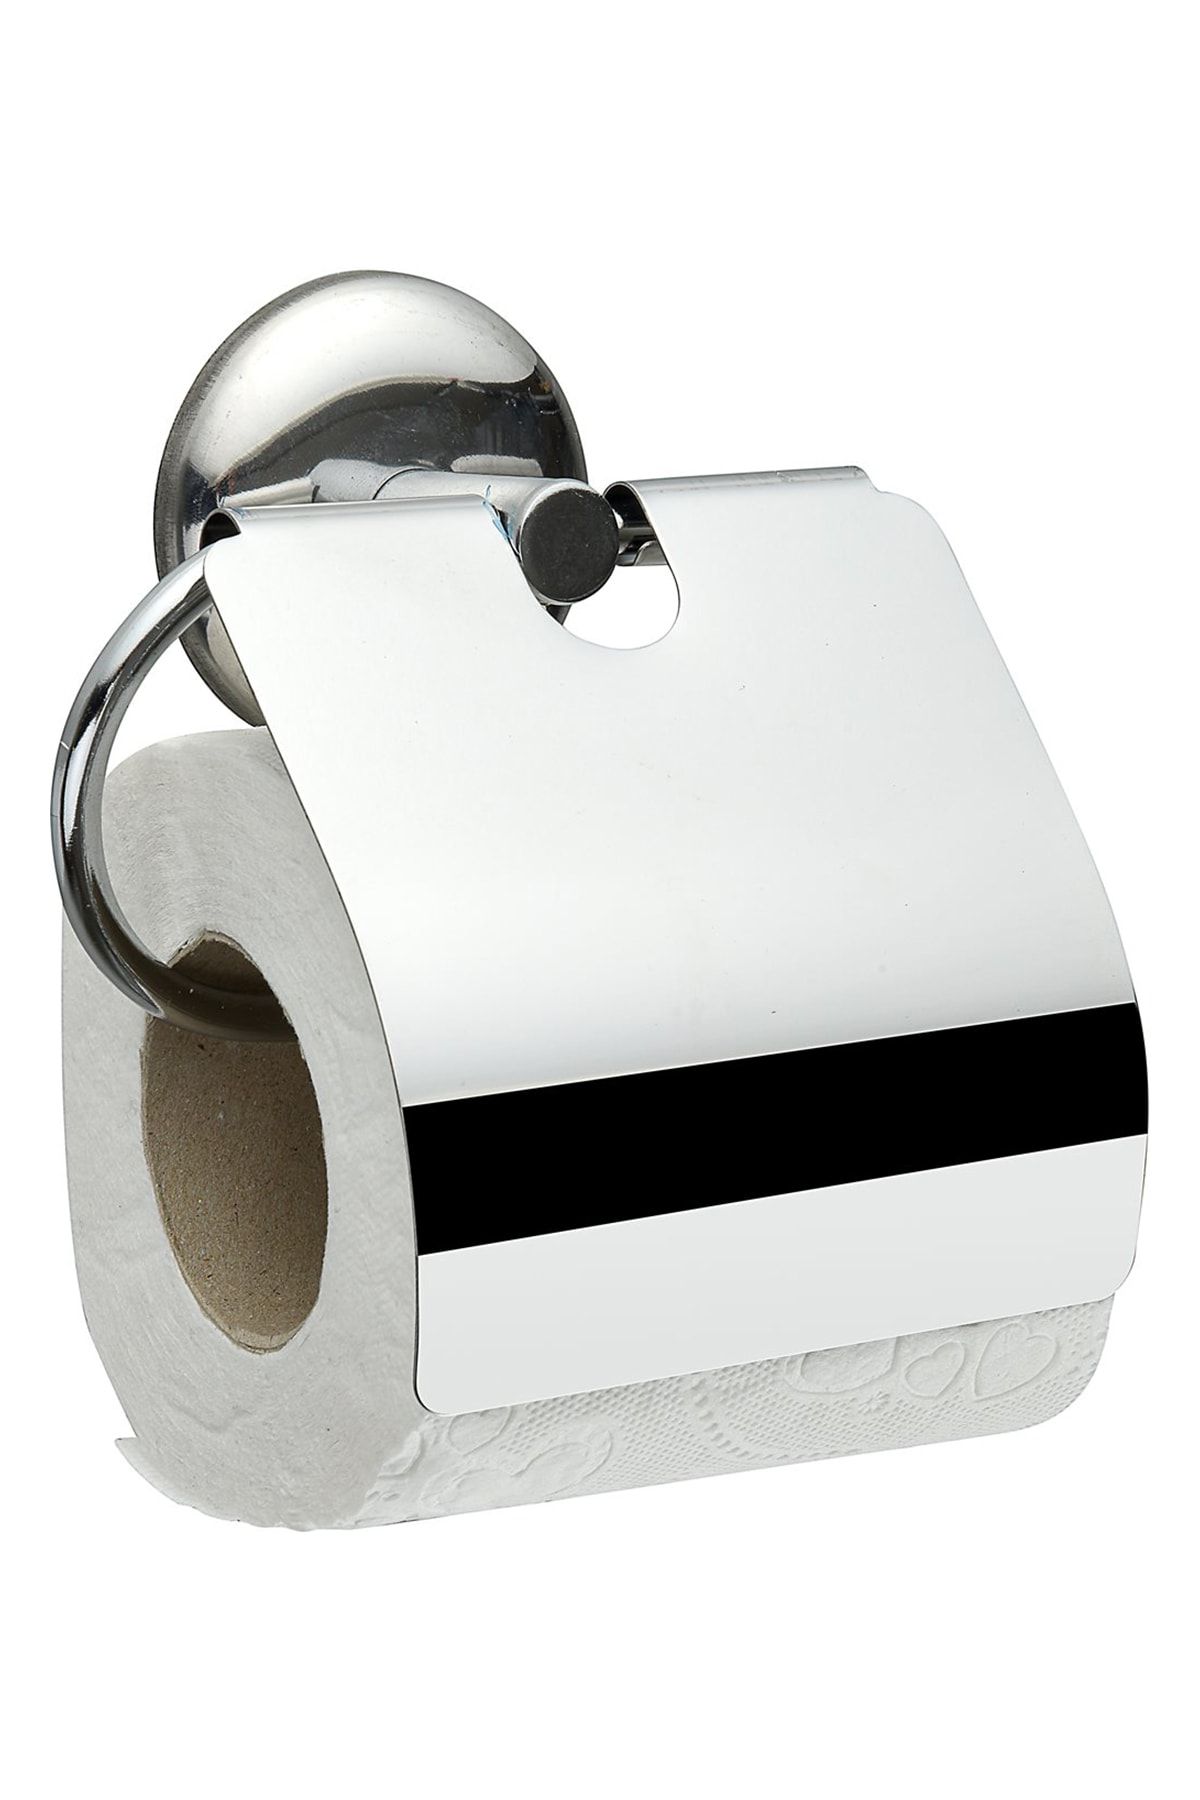 Tuğbasan Altıntepe Eko Kapaklı Tuvalet Kağıtlık